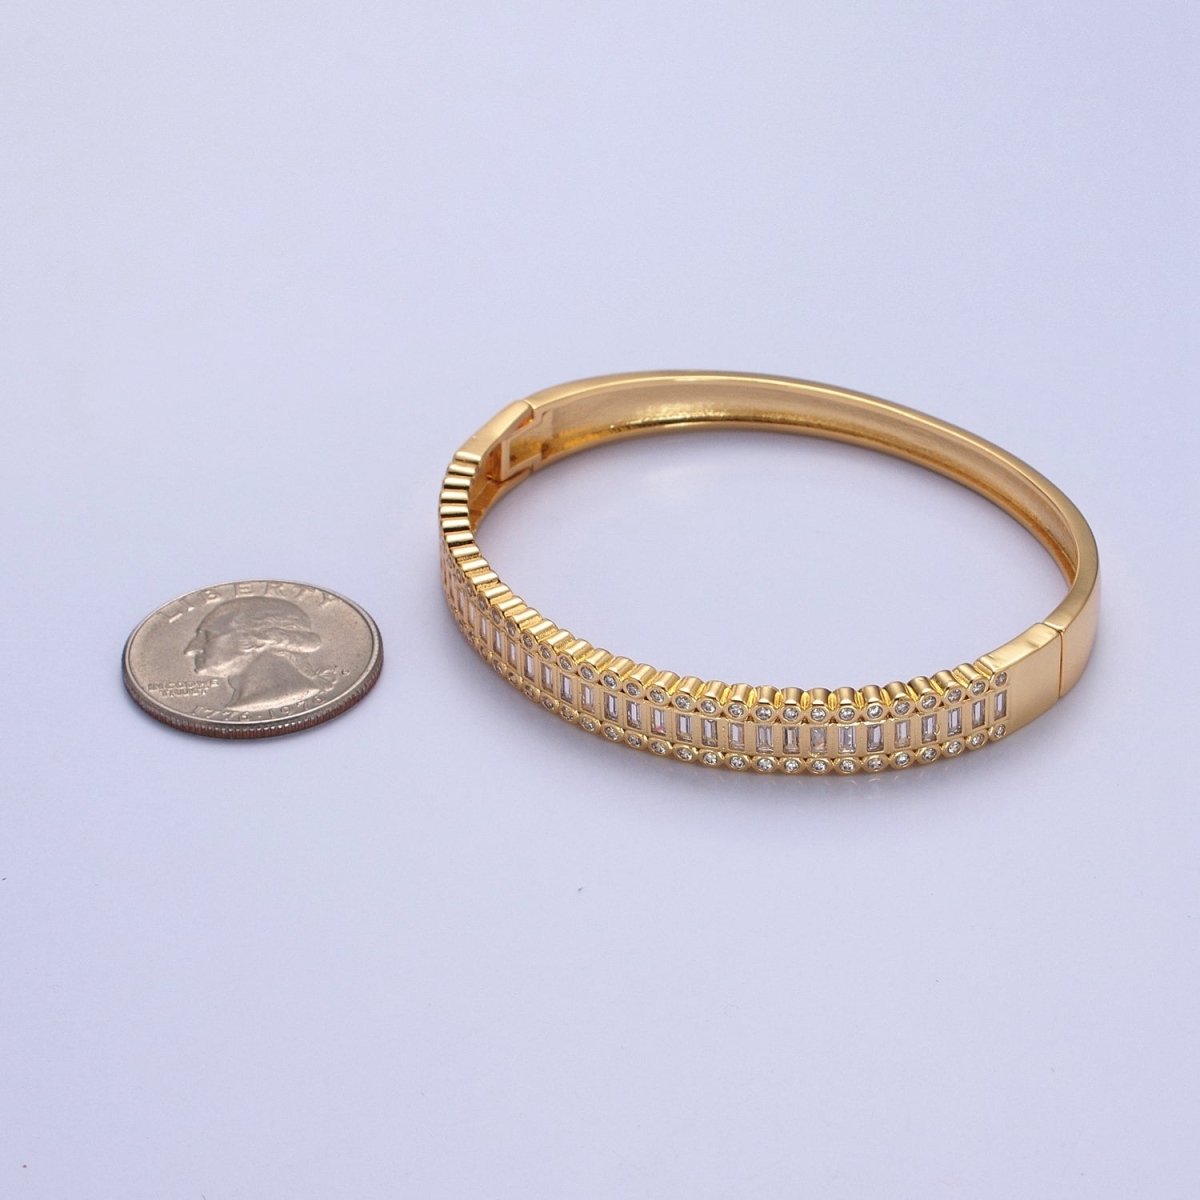 24K Gold Filled Slim Round CZ Stone Buckle Bangle Bracelet For Wholesale Bangles & Jewelry | WA-953 WA-954 Clearance Pricing - DLUXCA